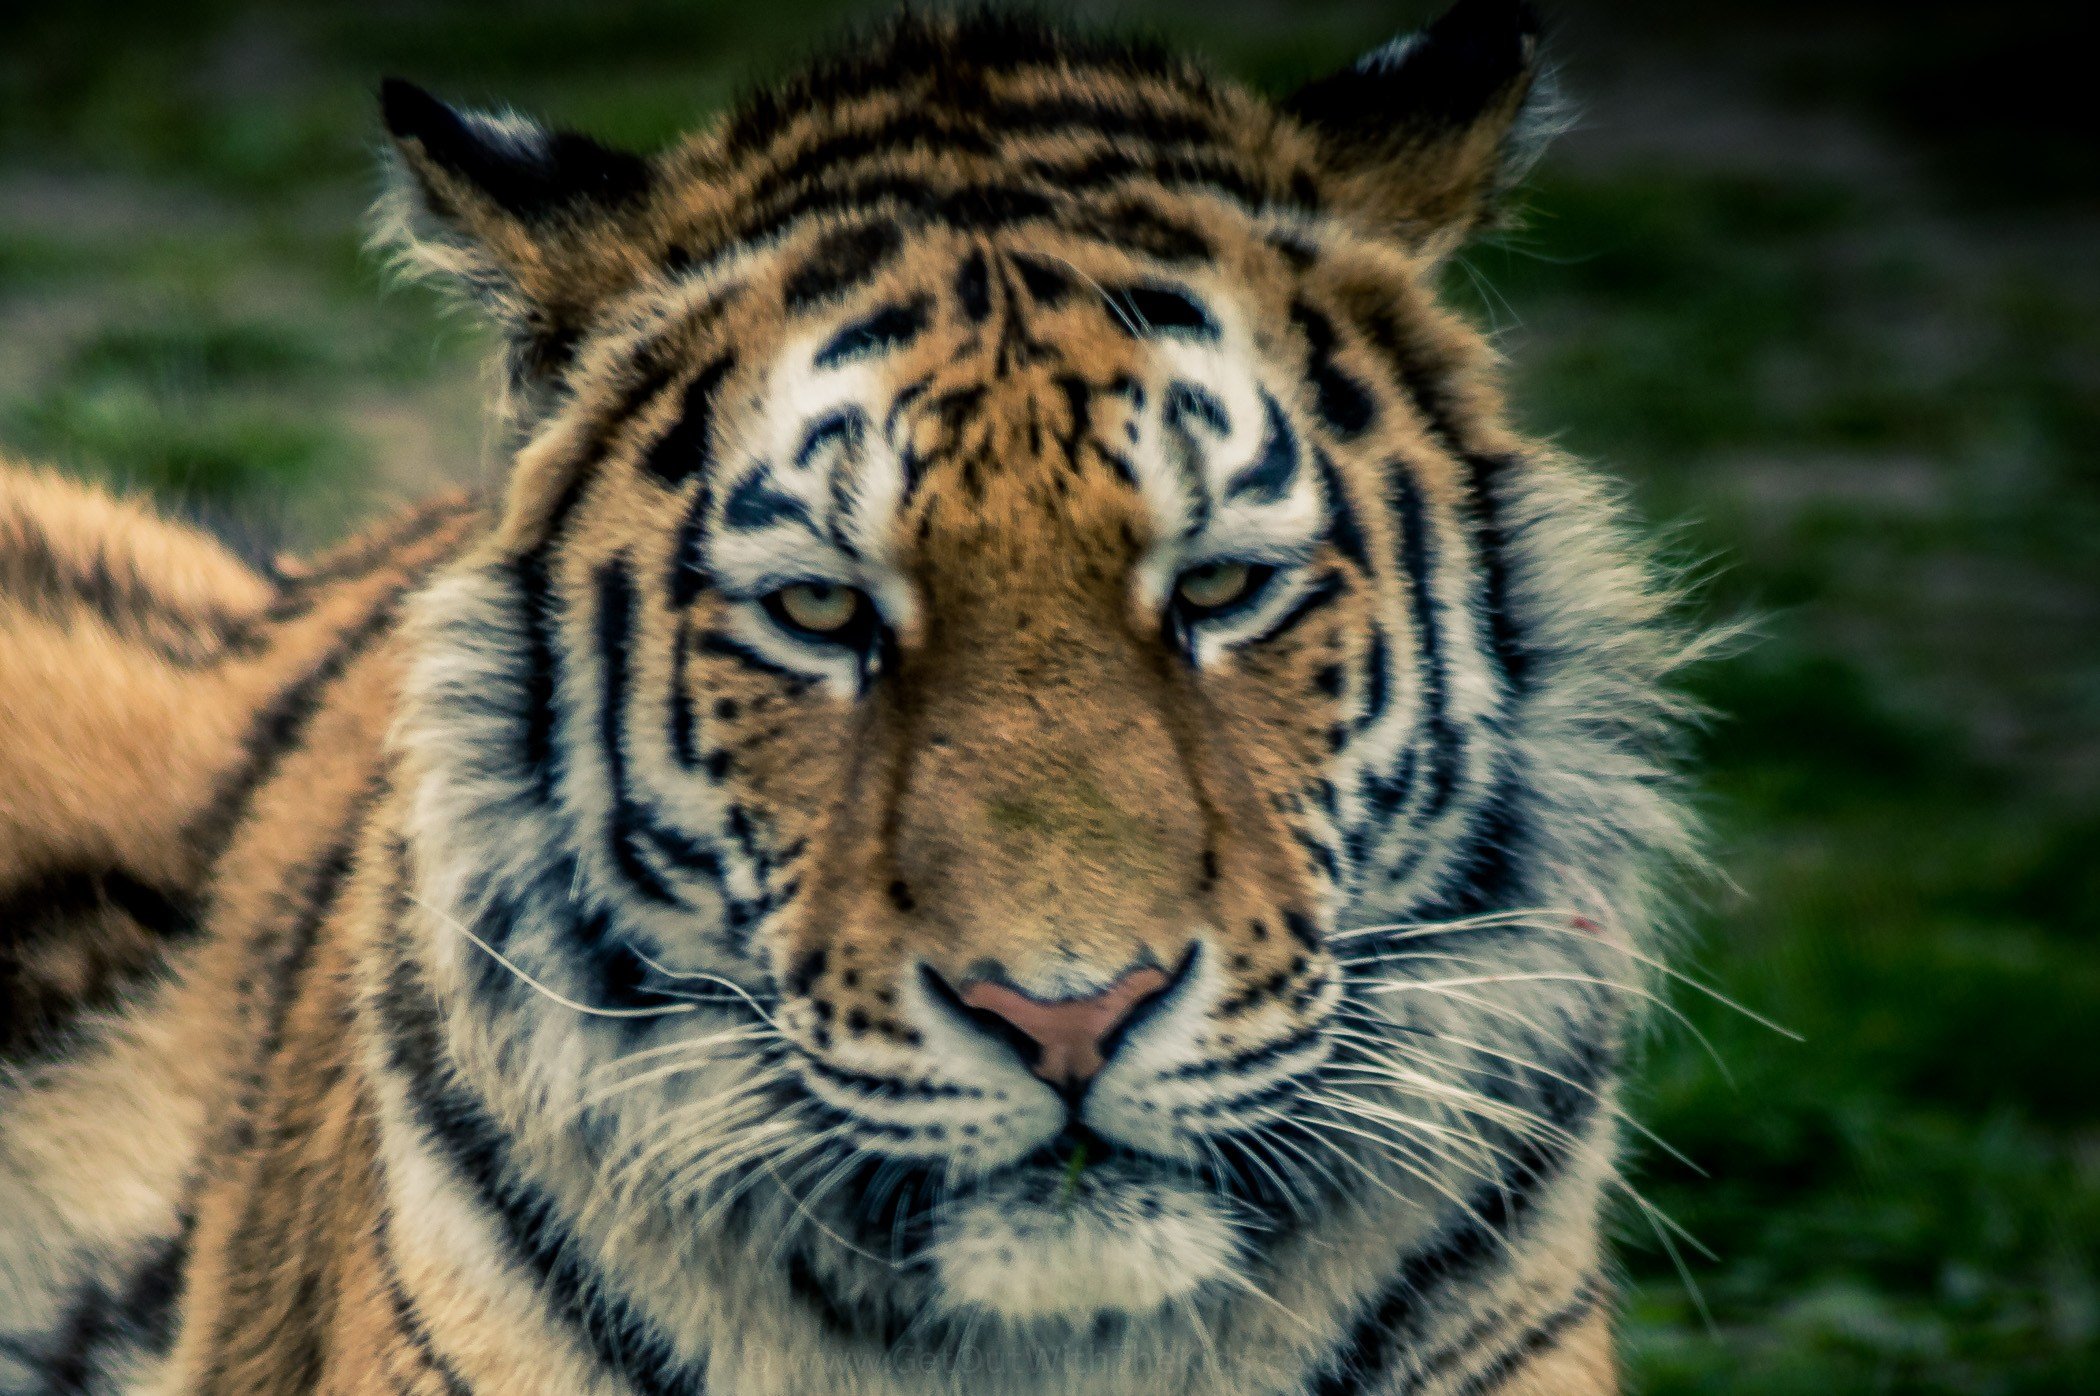 Tiger up close